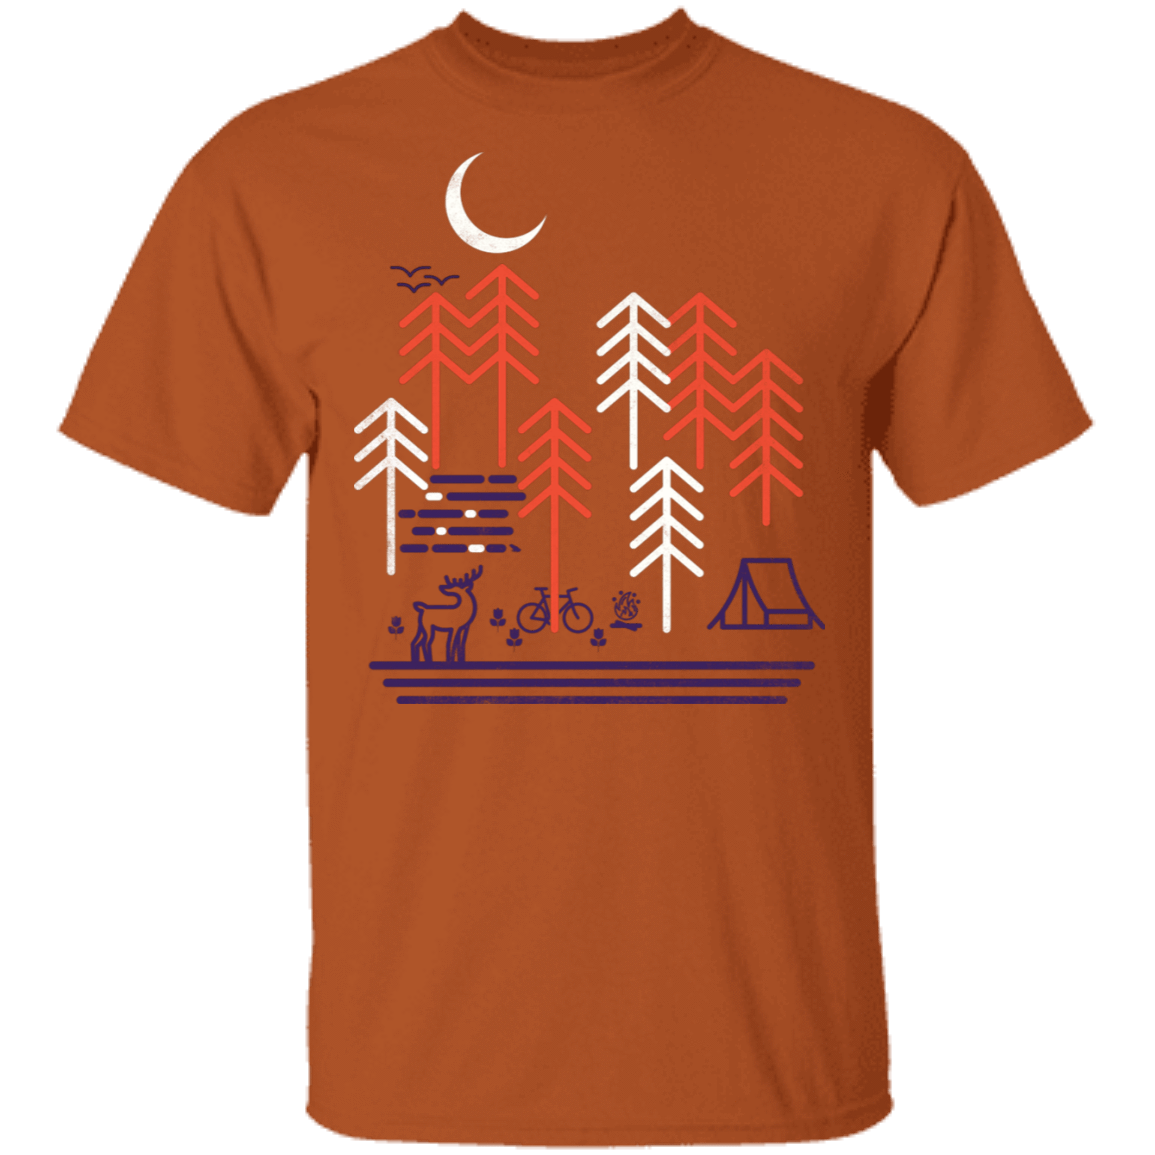 T-Shirts Texas Orange / S Bicycle Days T-Shirt